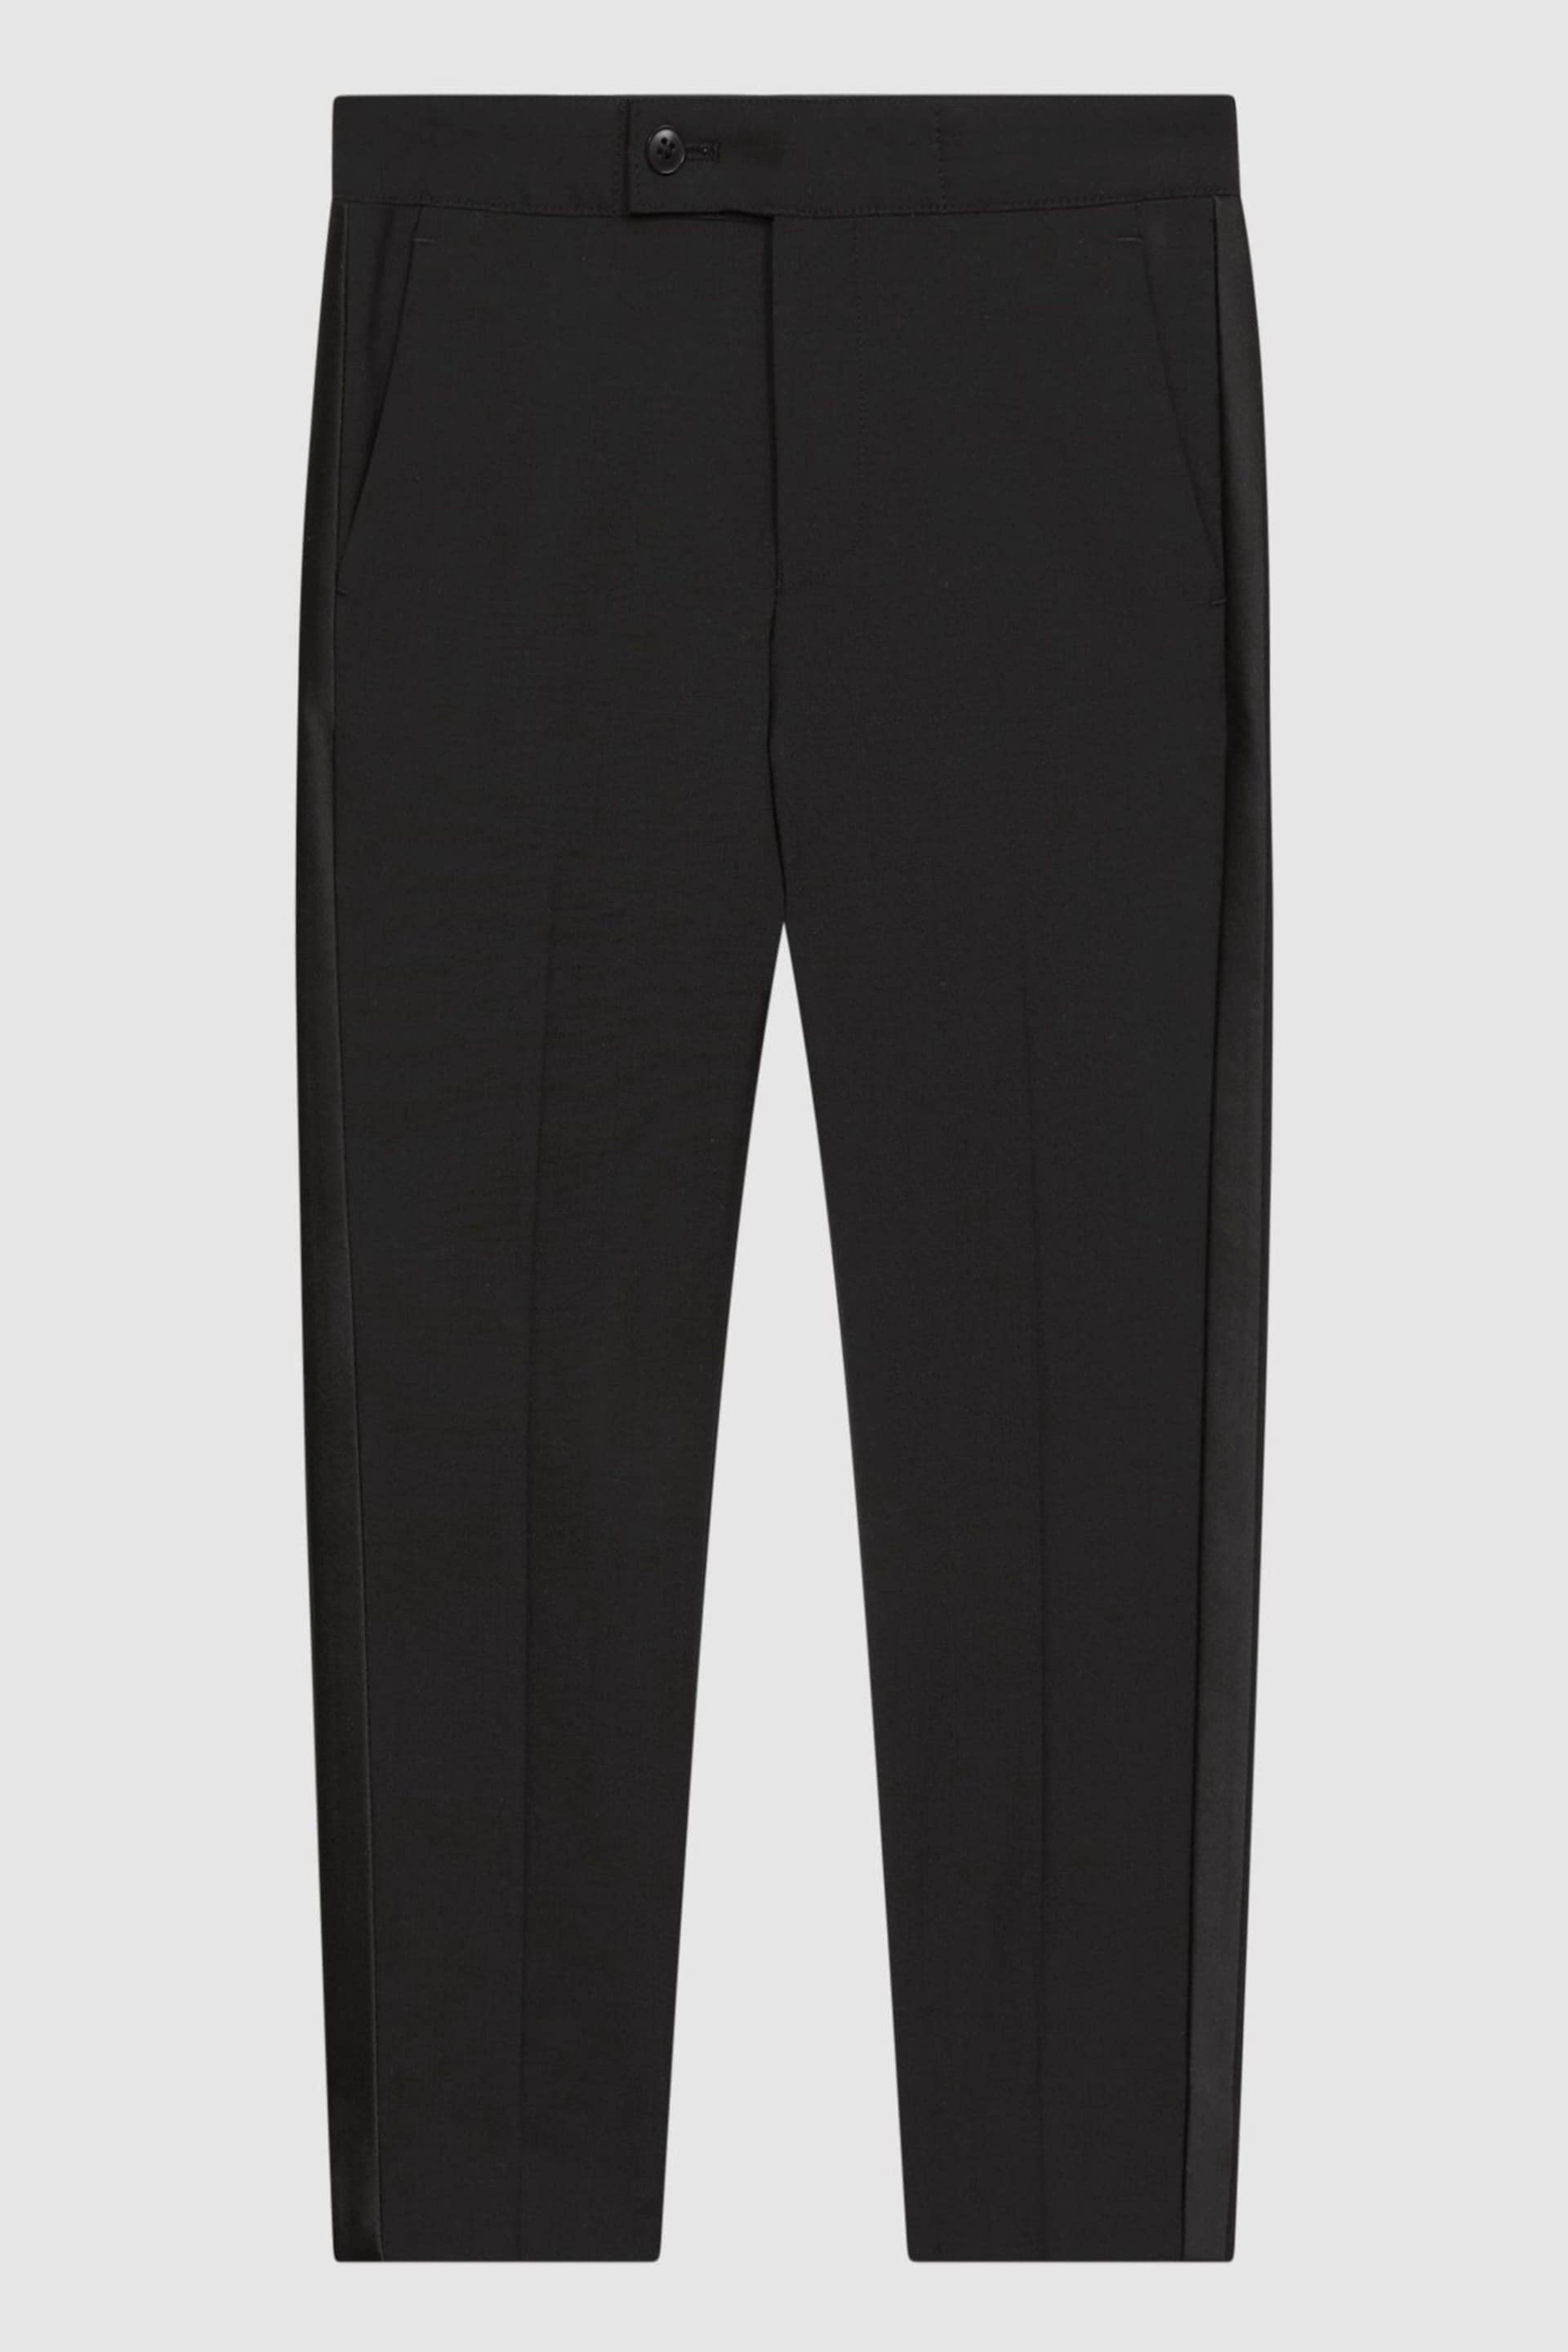 Reiss Black Knightsbridge Junior Tuxedo Trousers - Image 2 of 6